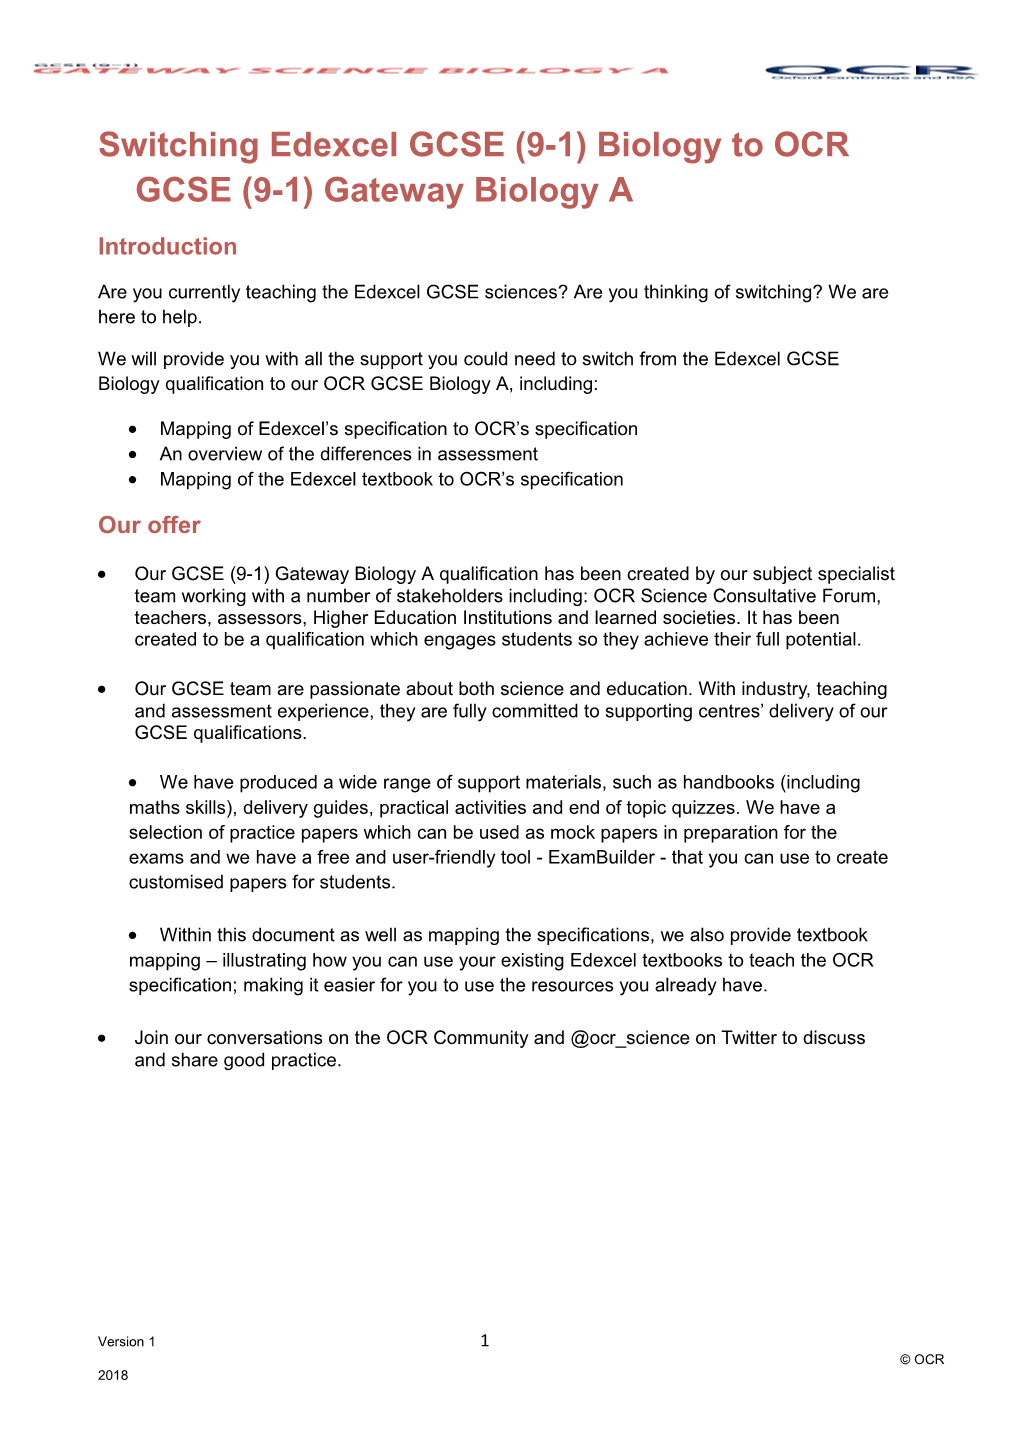 Switching Pack Edexcel GCSE (9-1) Biology to OCR GCSE (9-1) Gateway Biology A